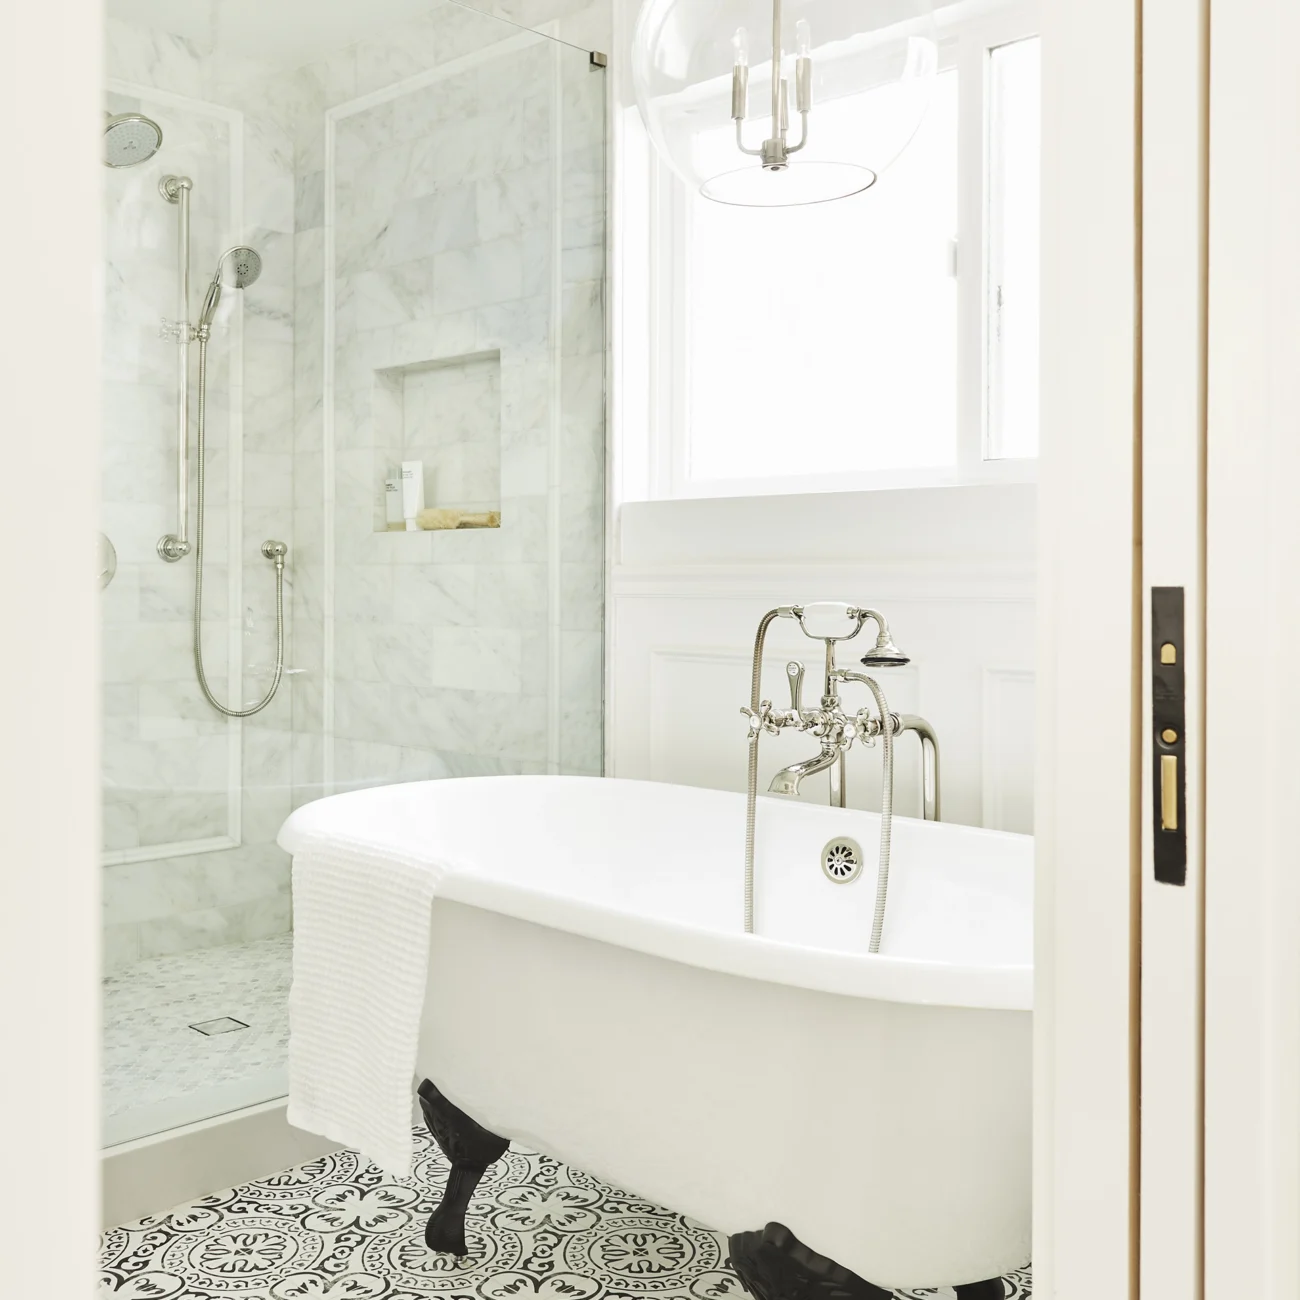 Christine Vroom Interiors | Gentry | Bright, white bathroom with soaker tub